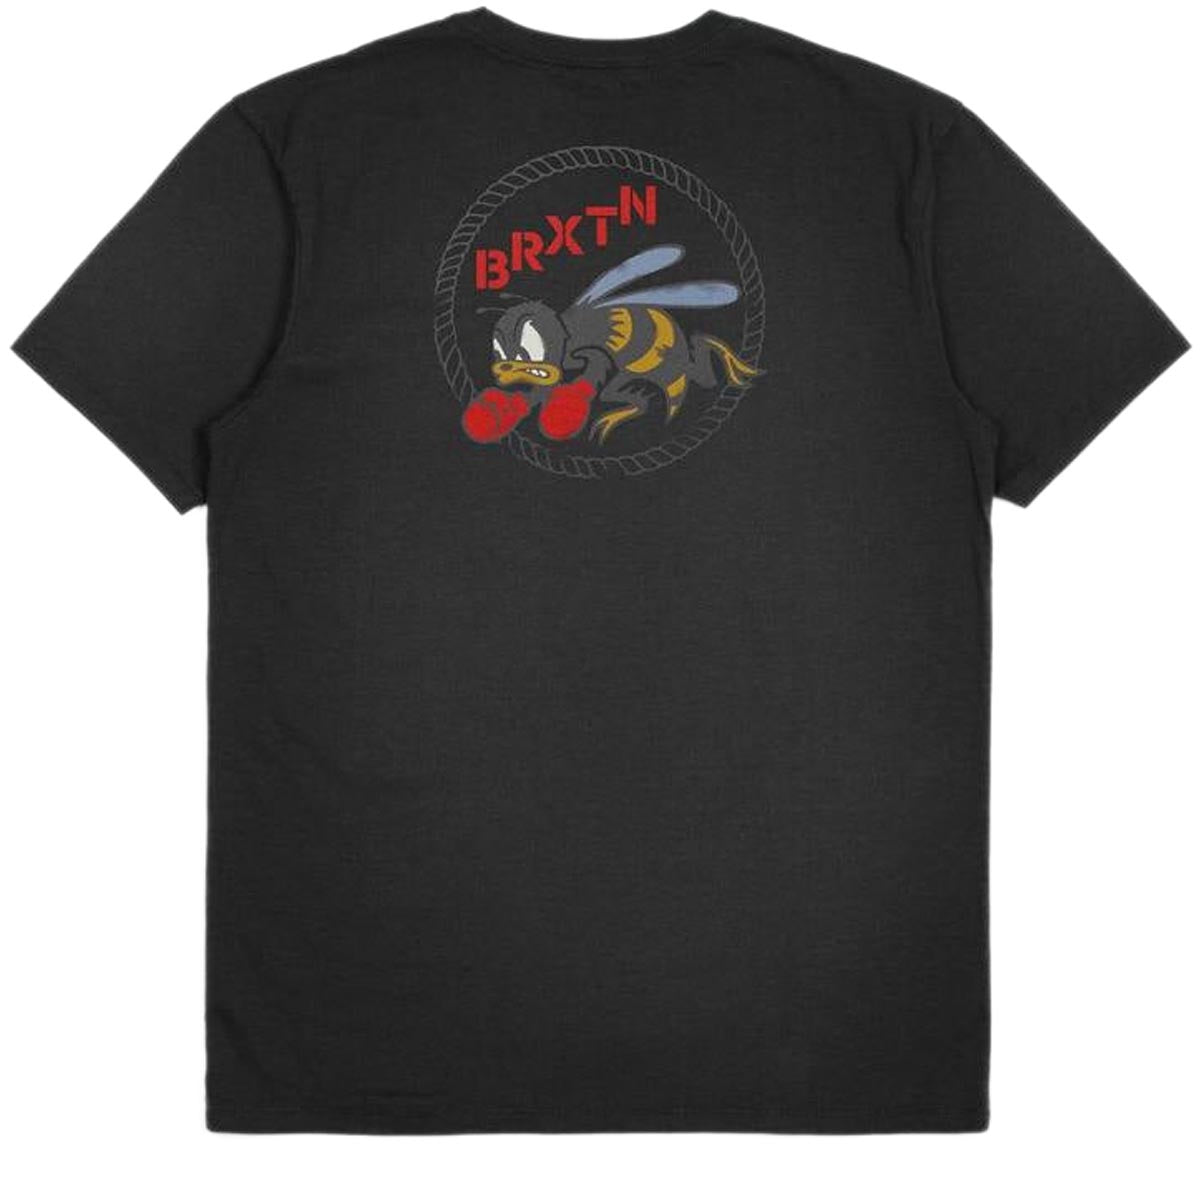 Brixton Rumble Bee Relaxed T-Shirt - Black Garment Dye image 1